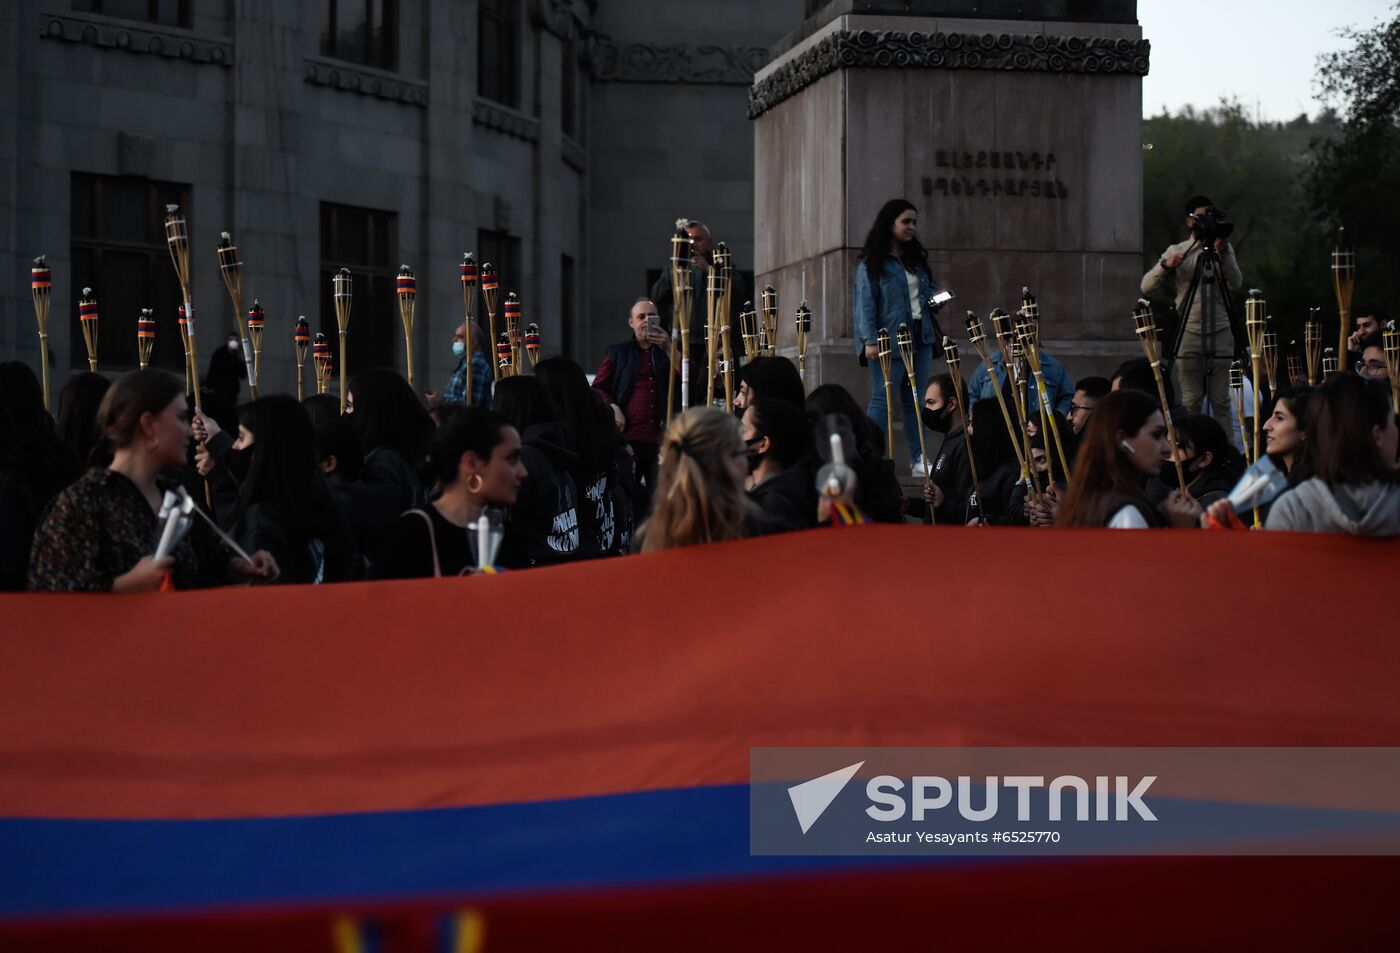 Armenia Genocide Anniversary